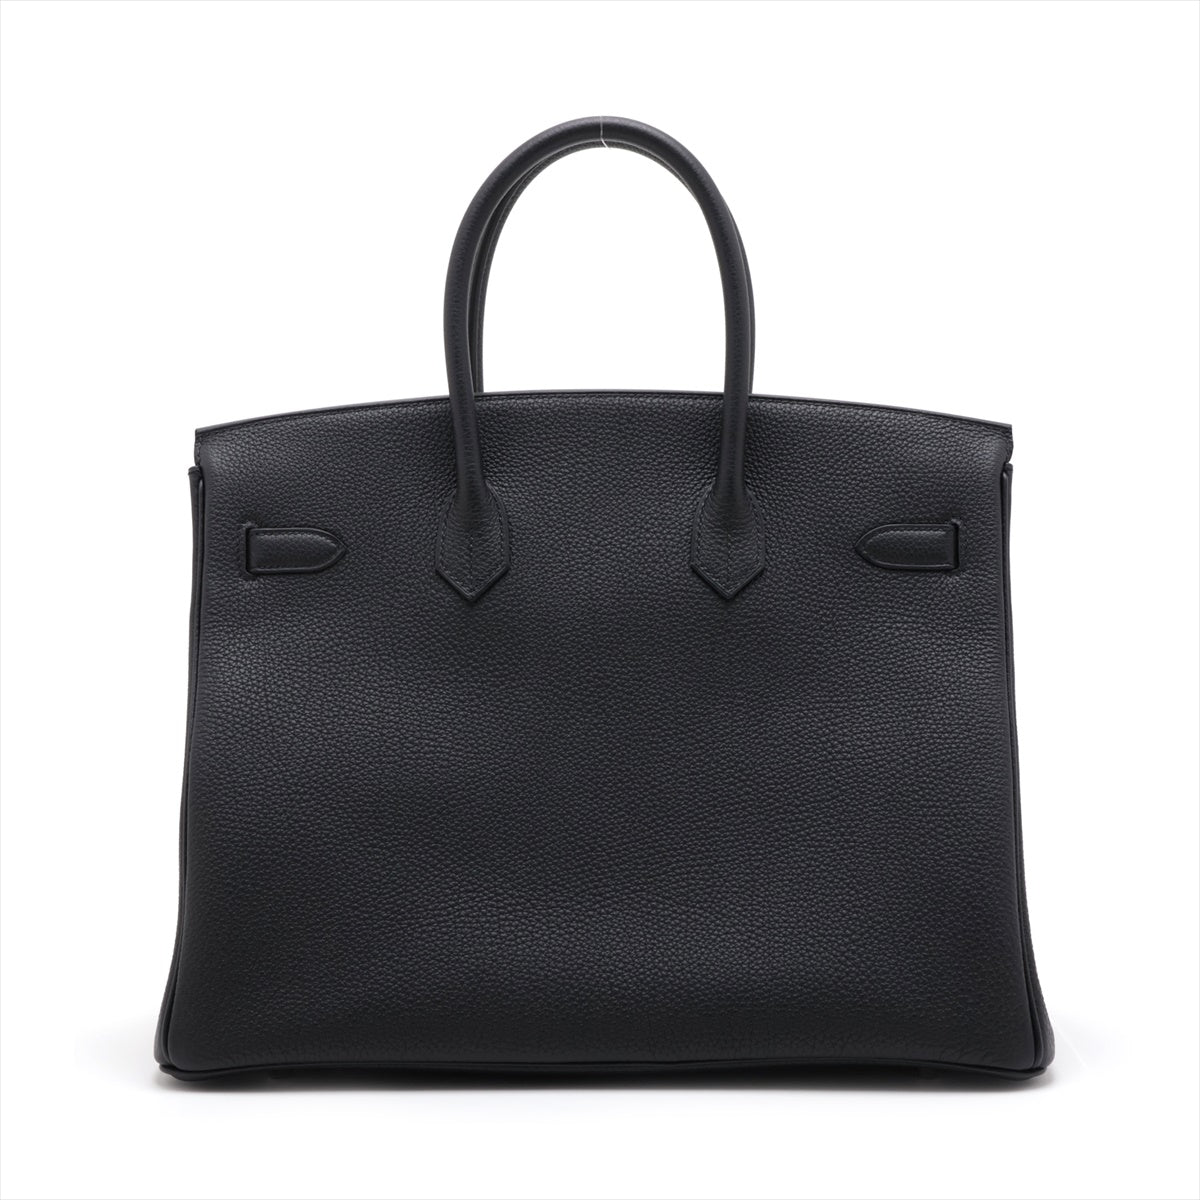 Hermes Black Togo Birkin 35 Handbag